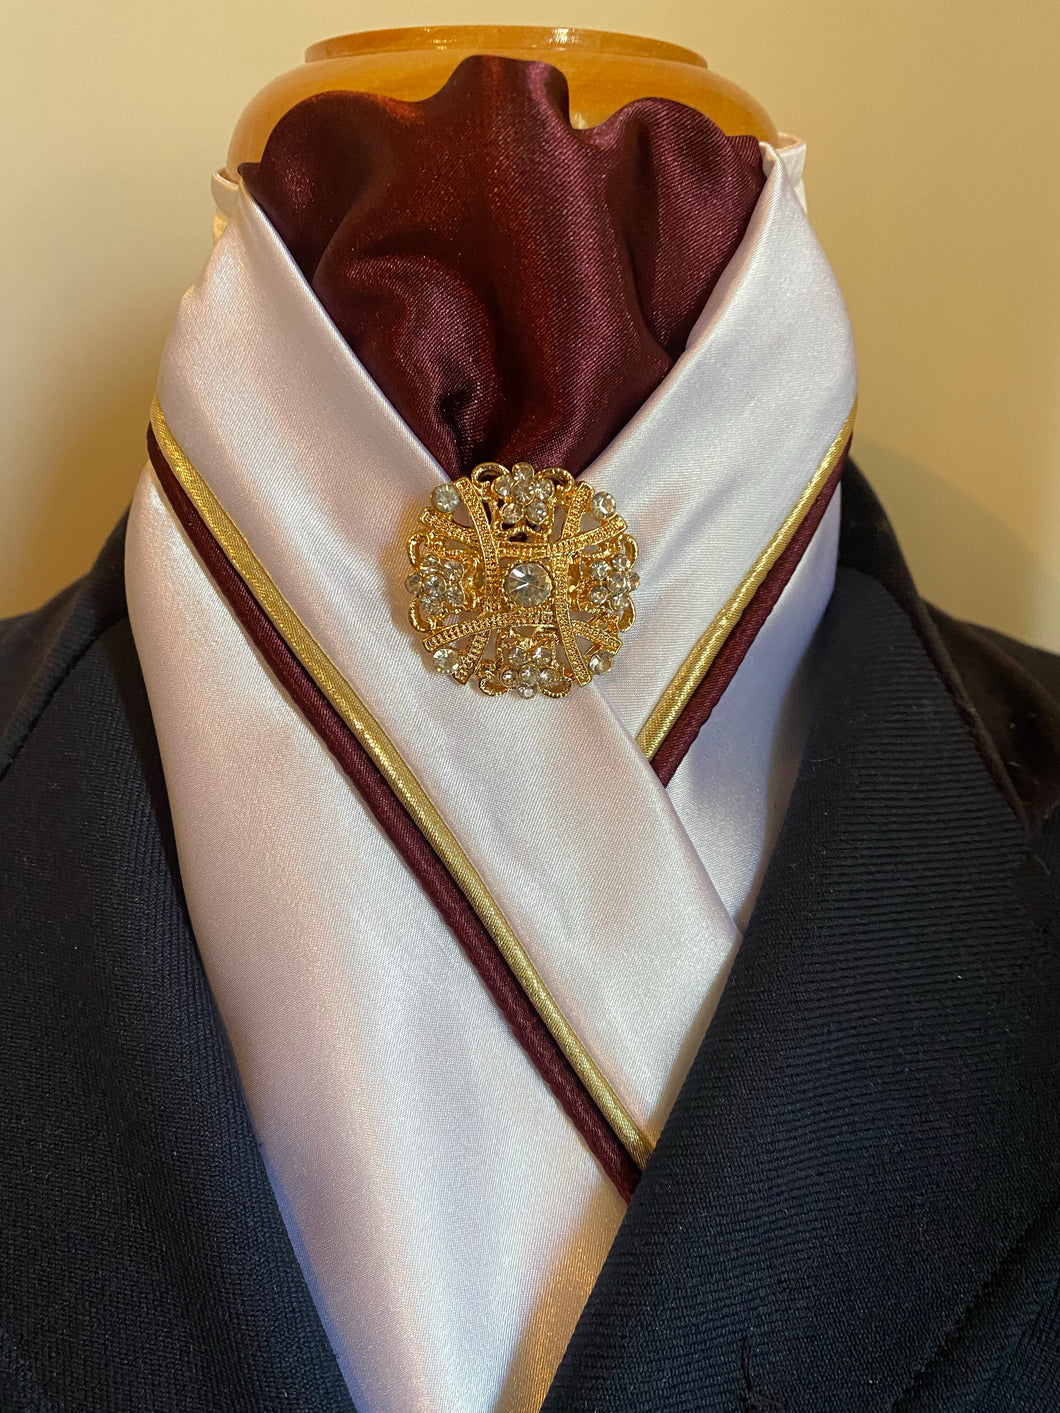 HHD White or Cream Satin Custom Stock Tie Burgundy & Gold